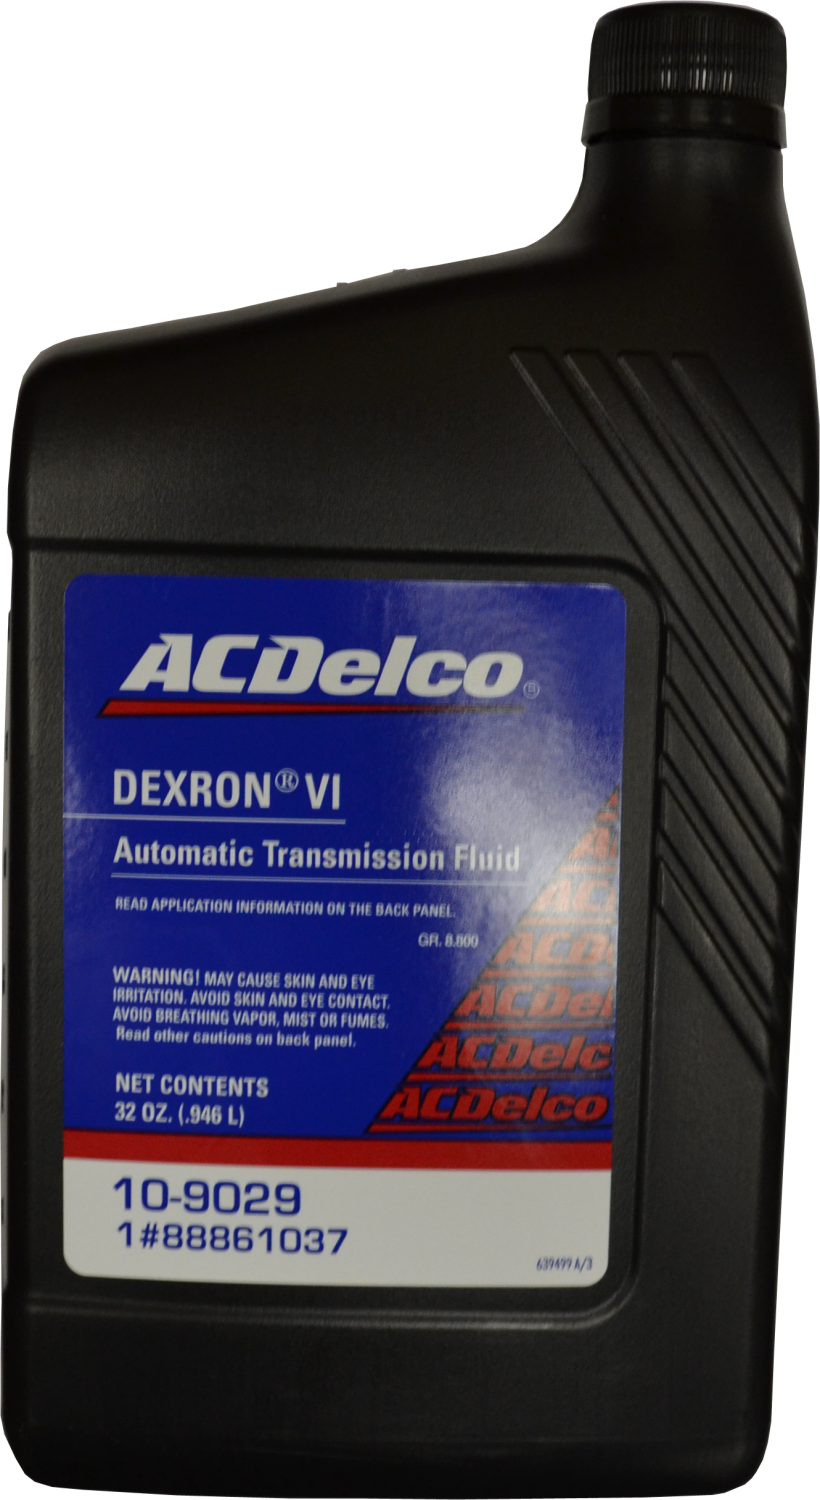 Transmission Fluid - GM DEXRON VI Manufacturers Recommended Fluid